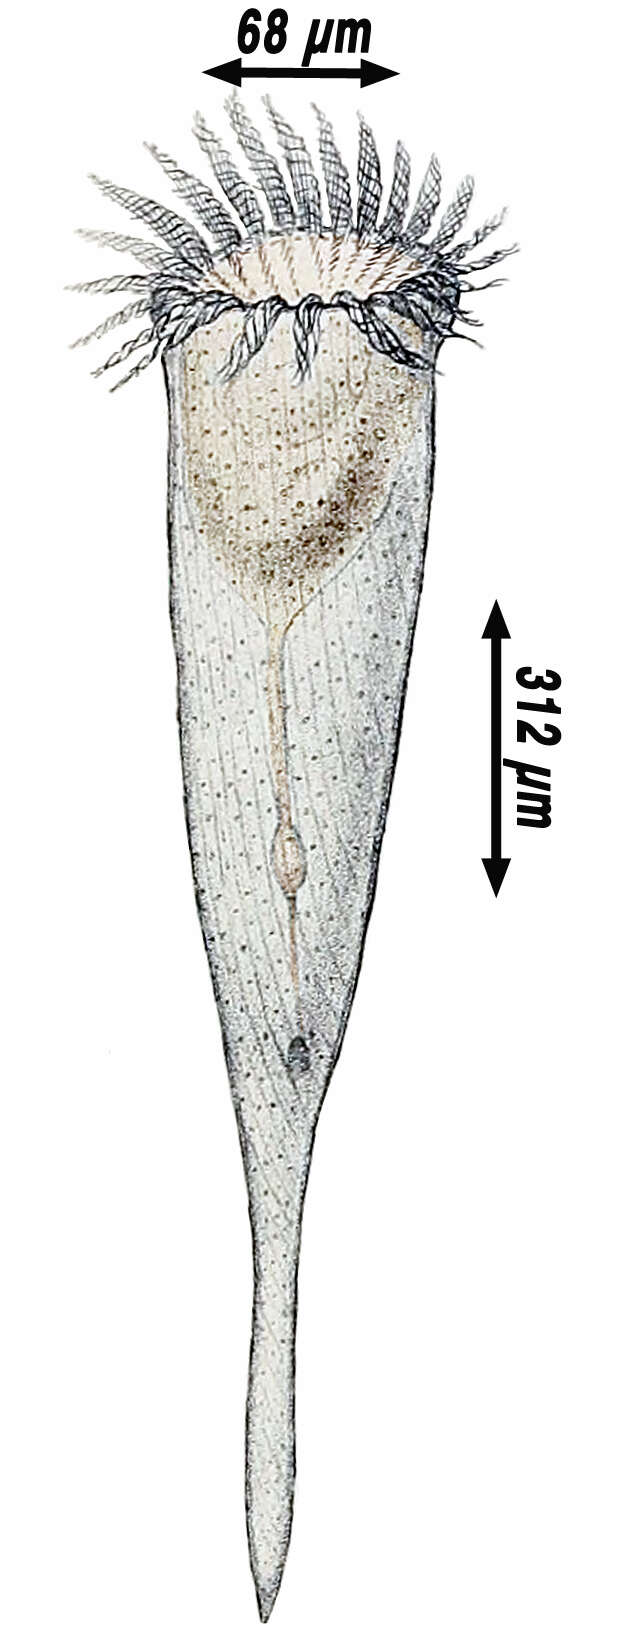 Image of Rhabdonellidae